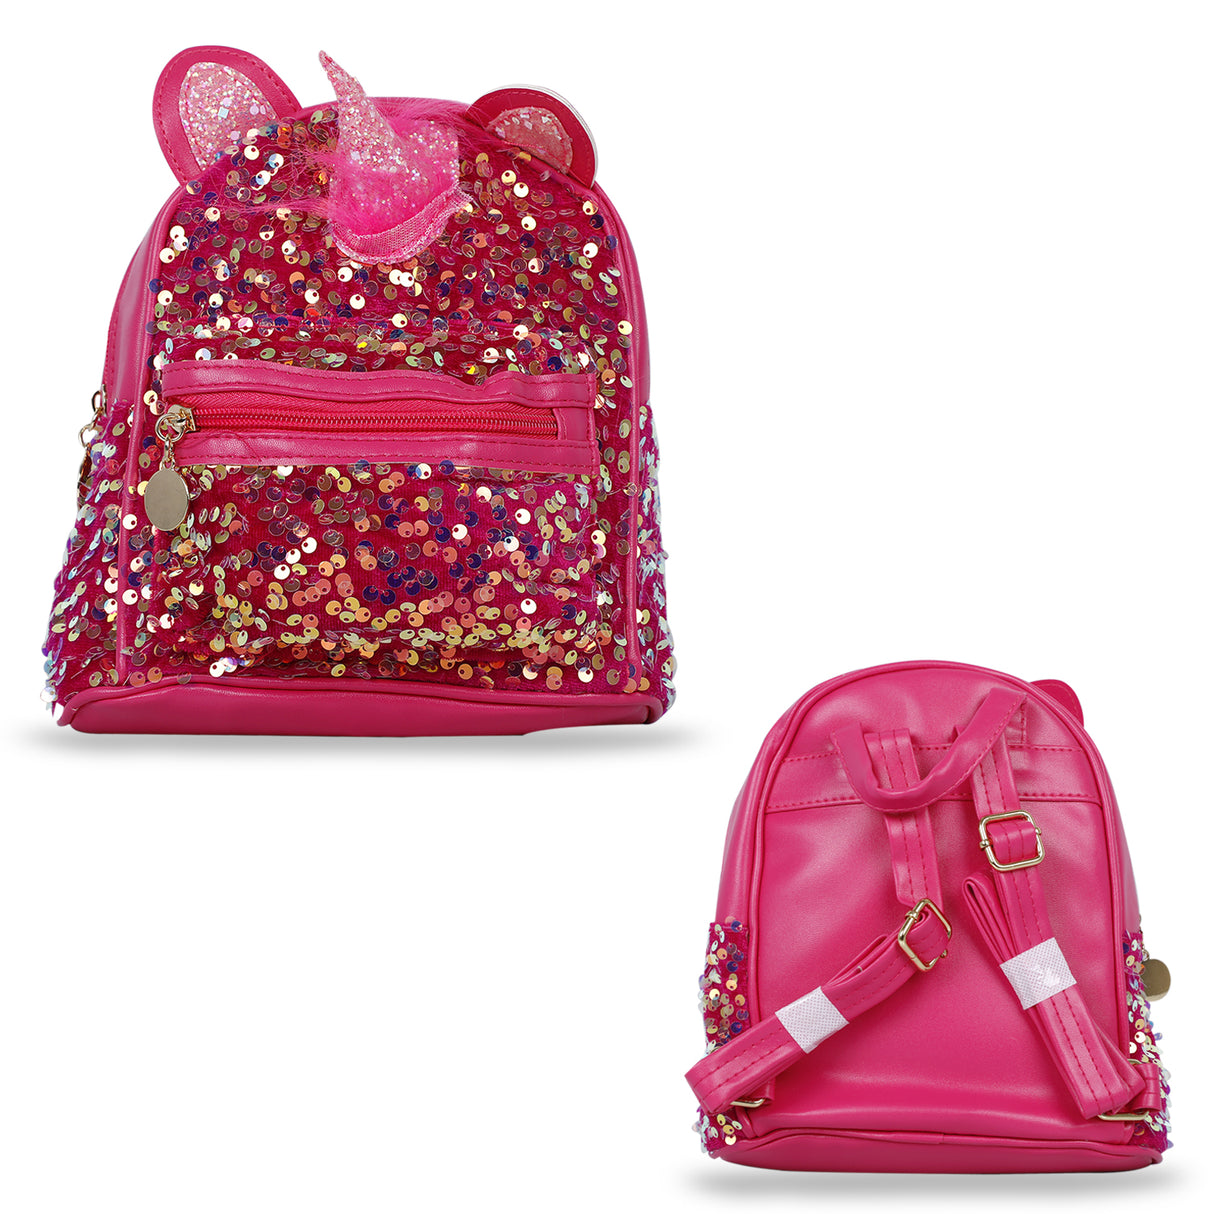 Fashionable Unicorn Girls Backpack Bag